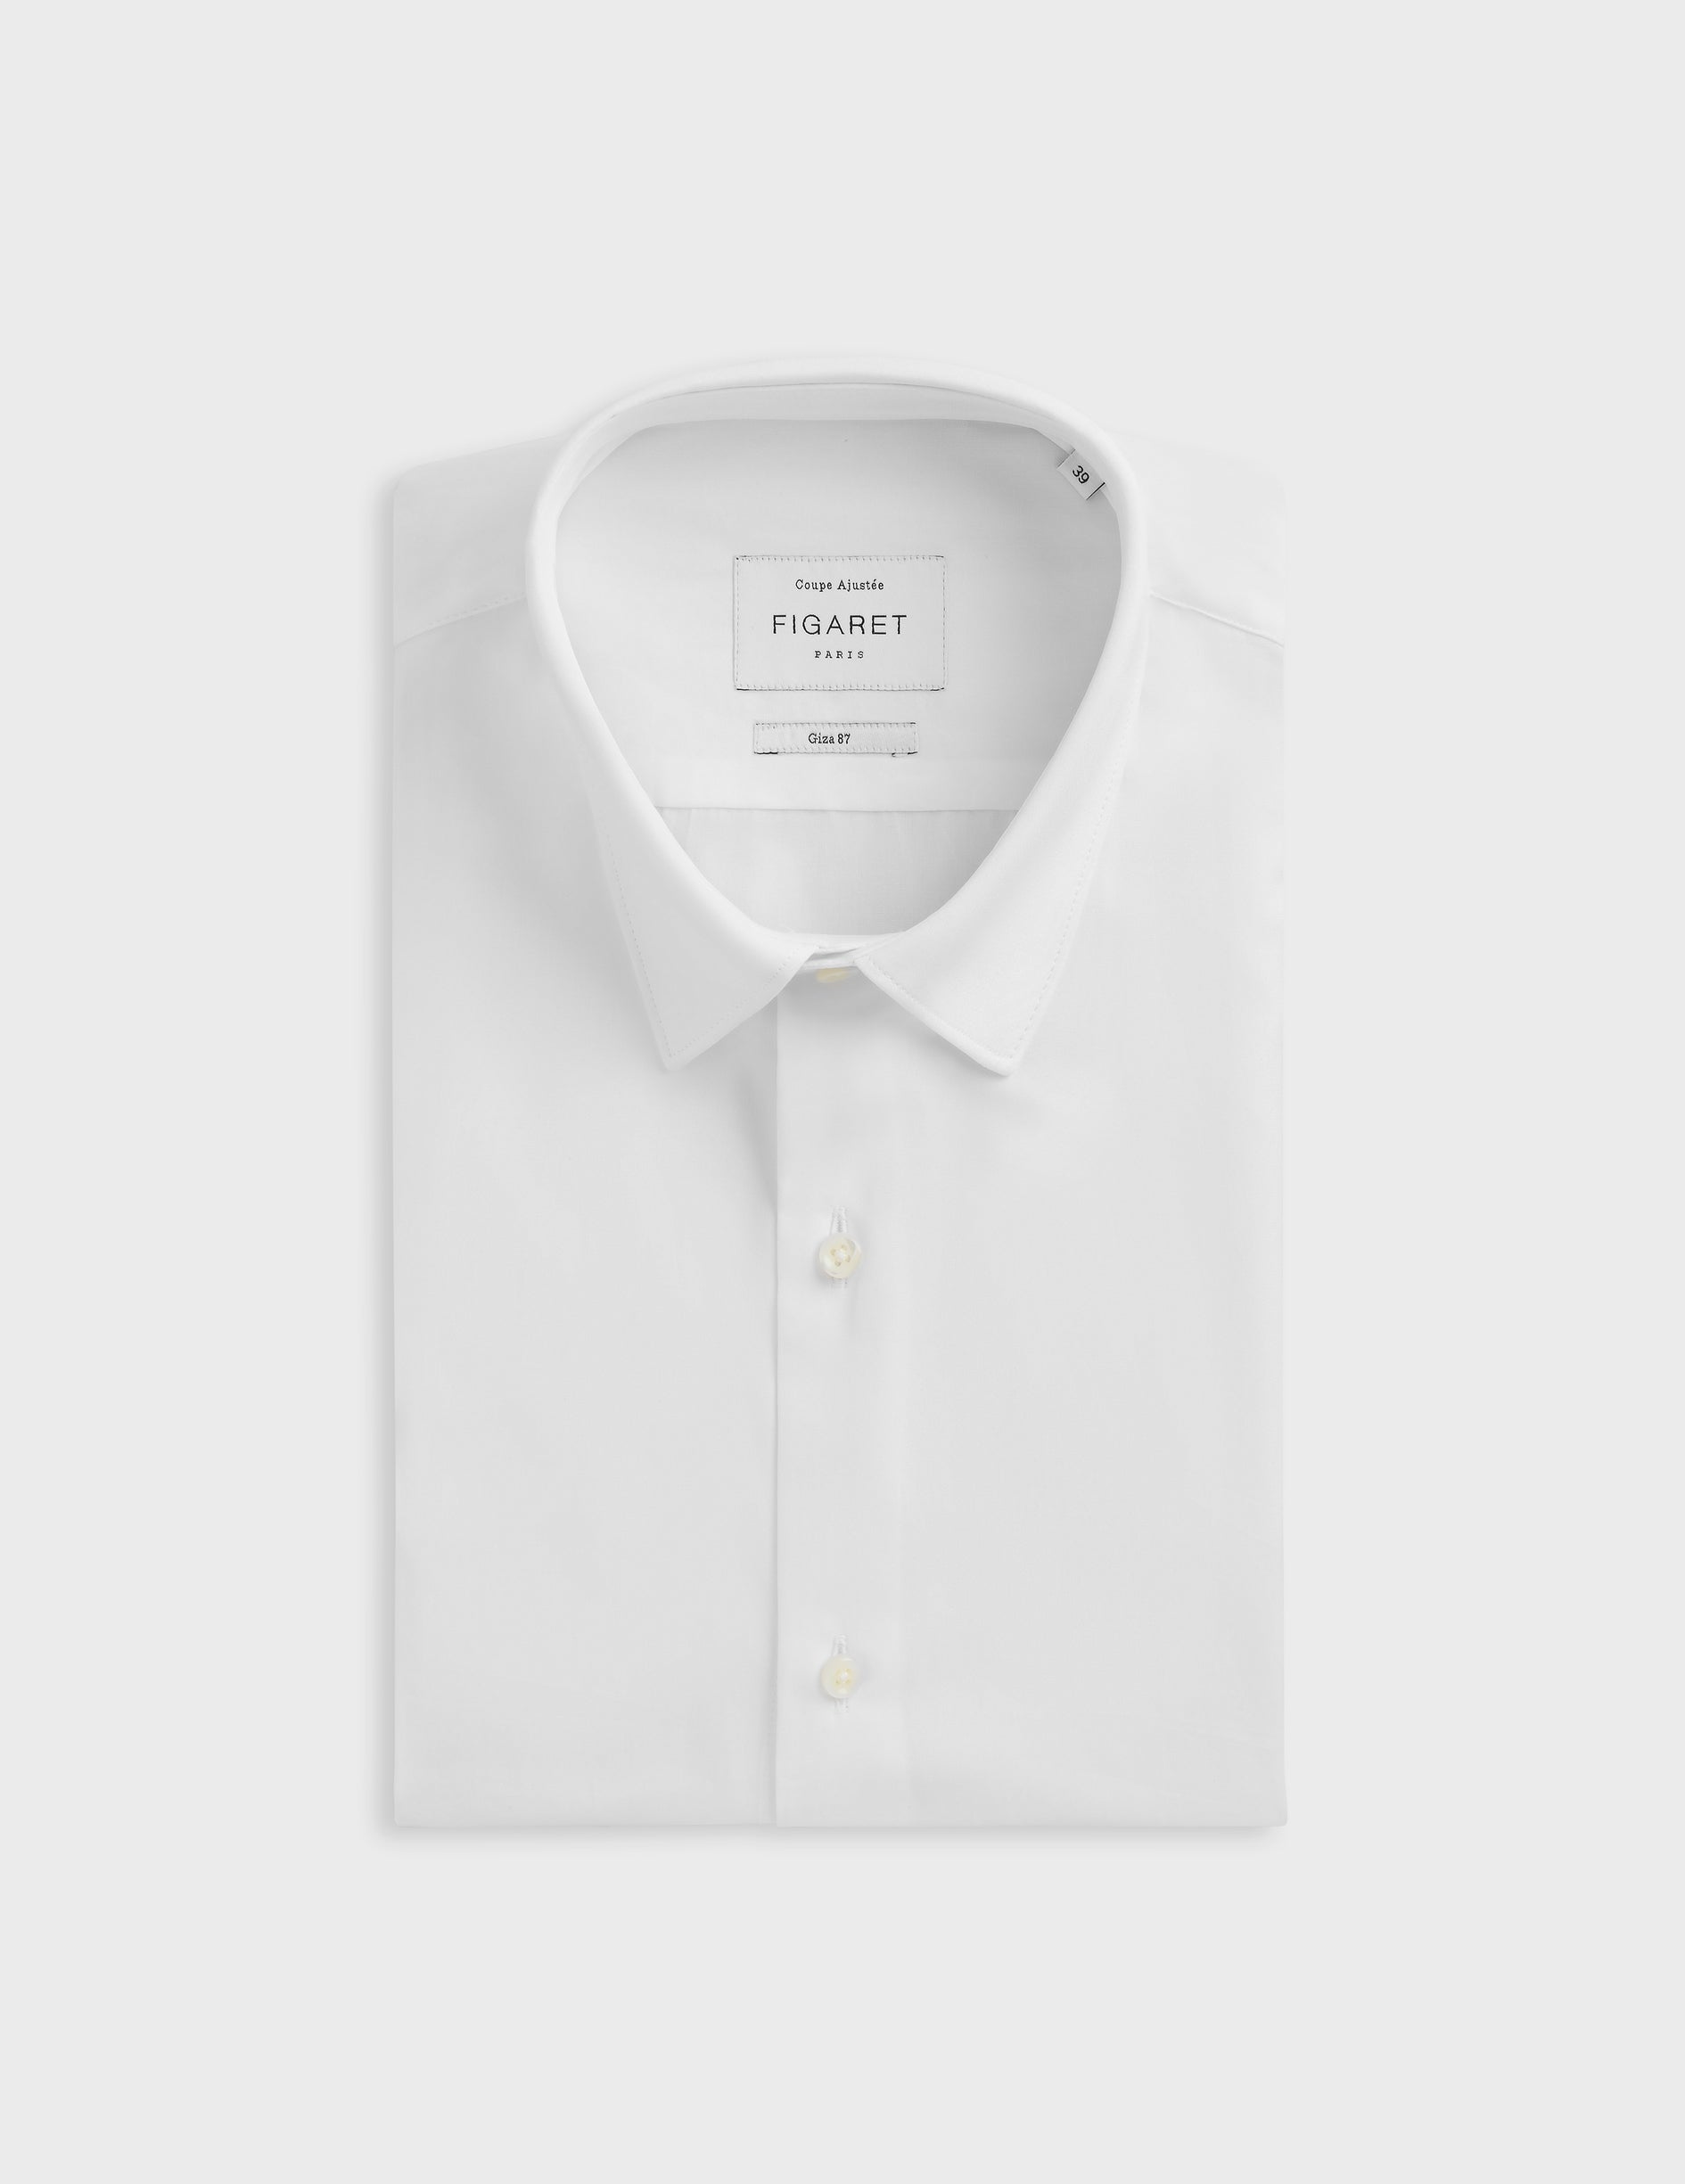 Fitted white Prestige shirt